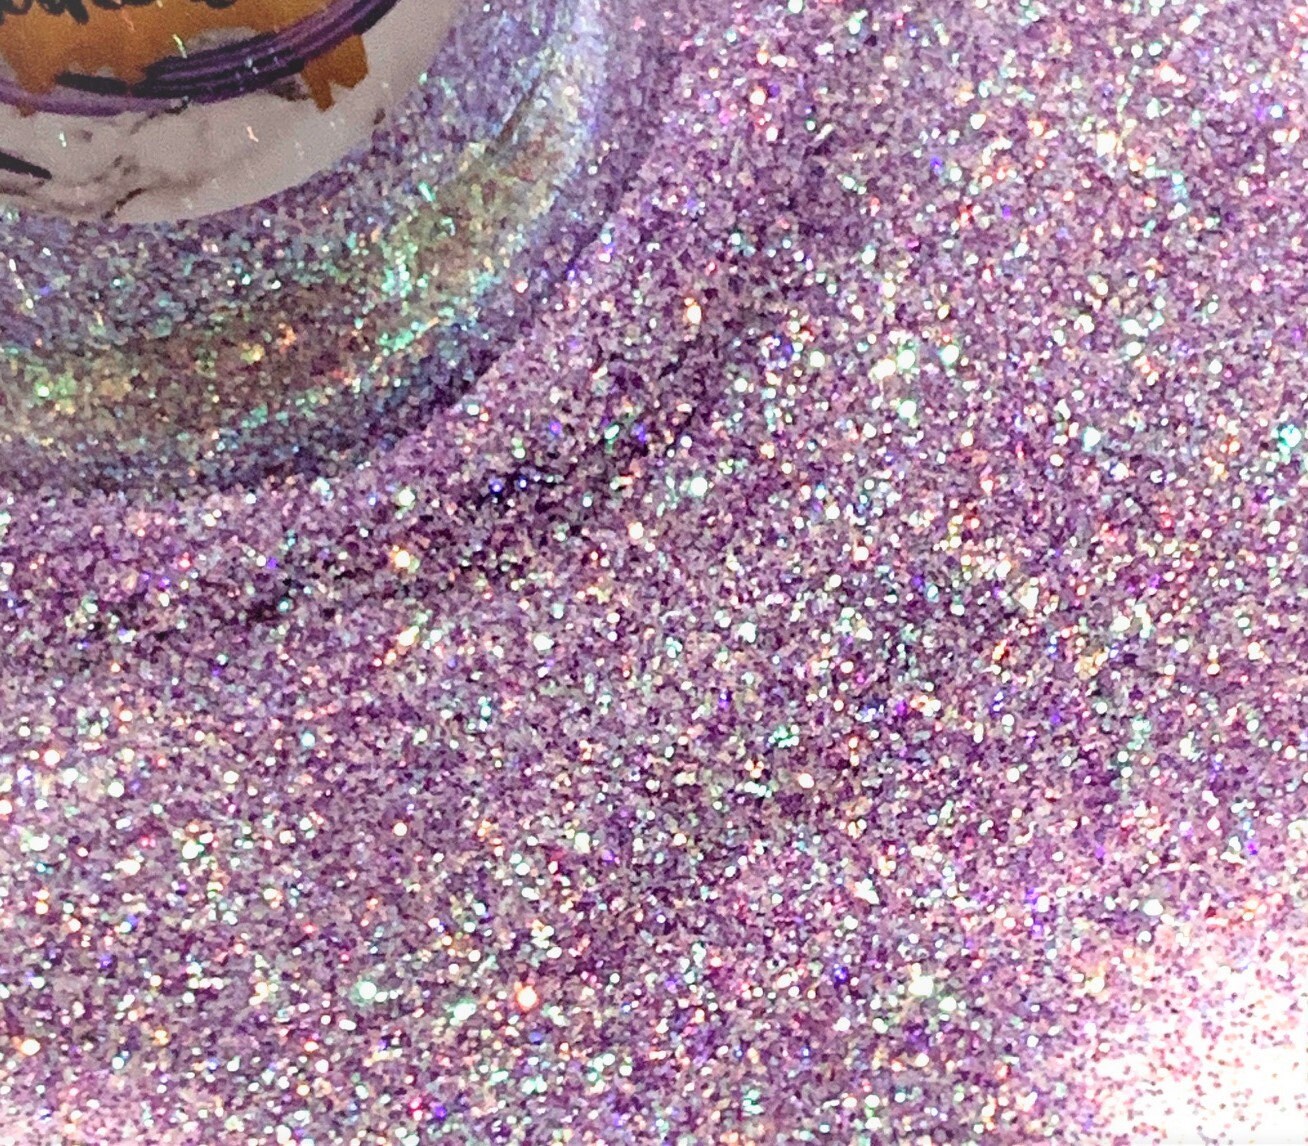 A close up of a purple glittery substance in a jar - Diamond